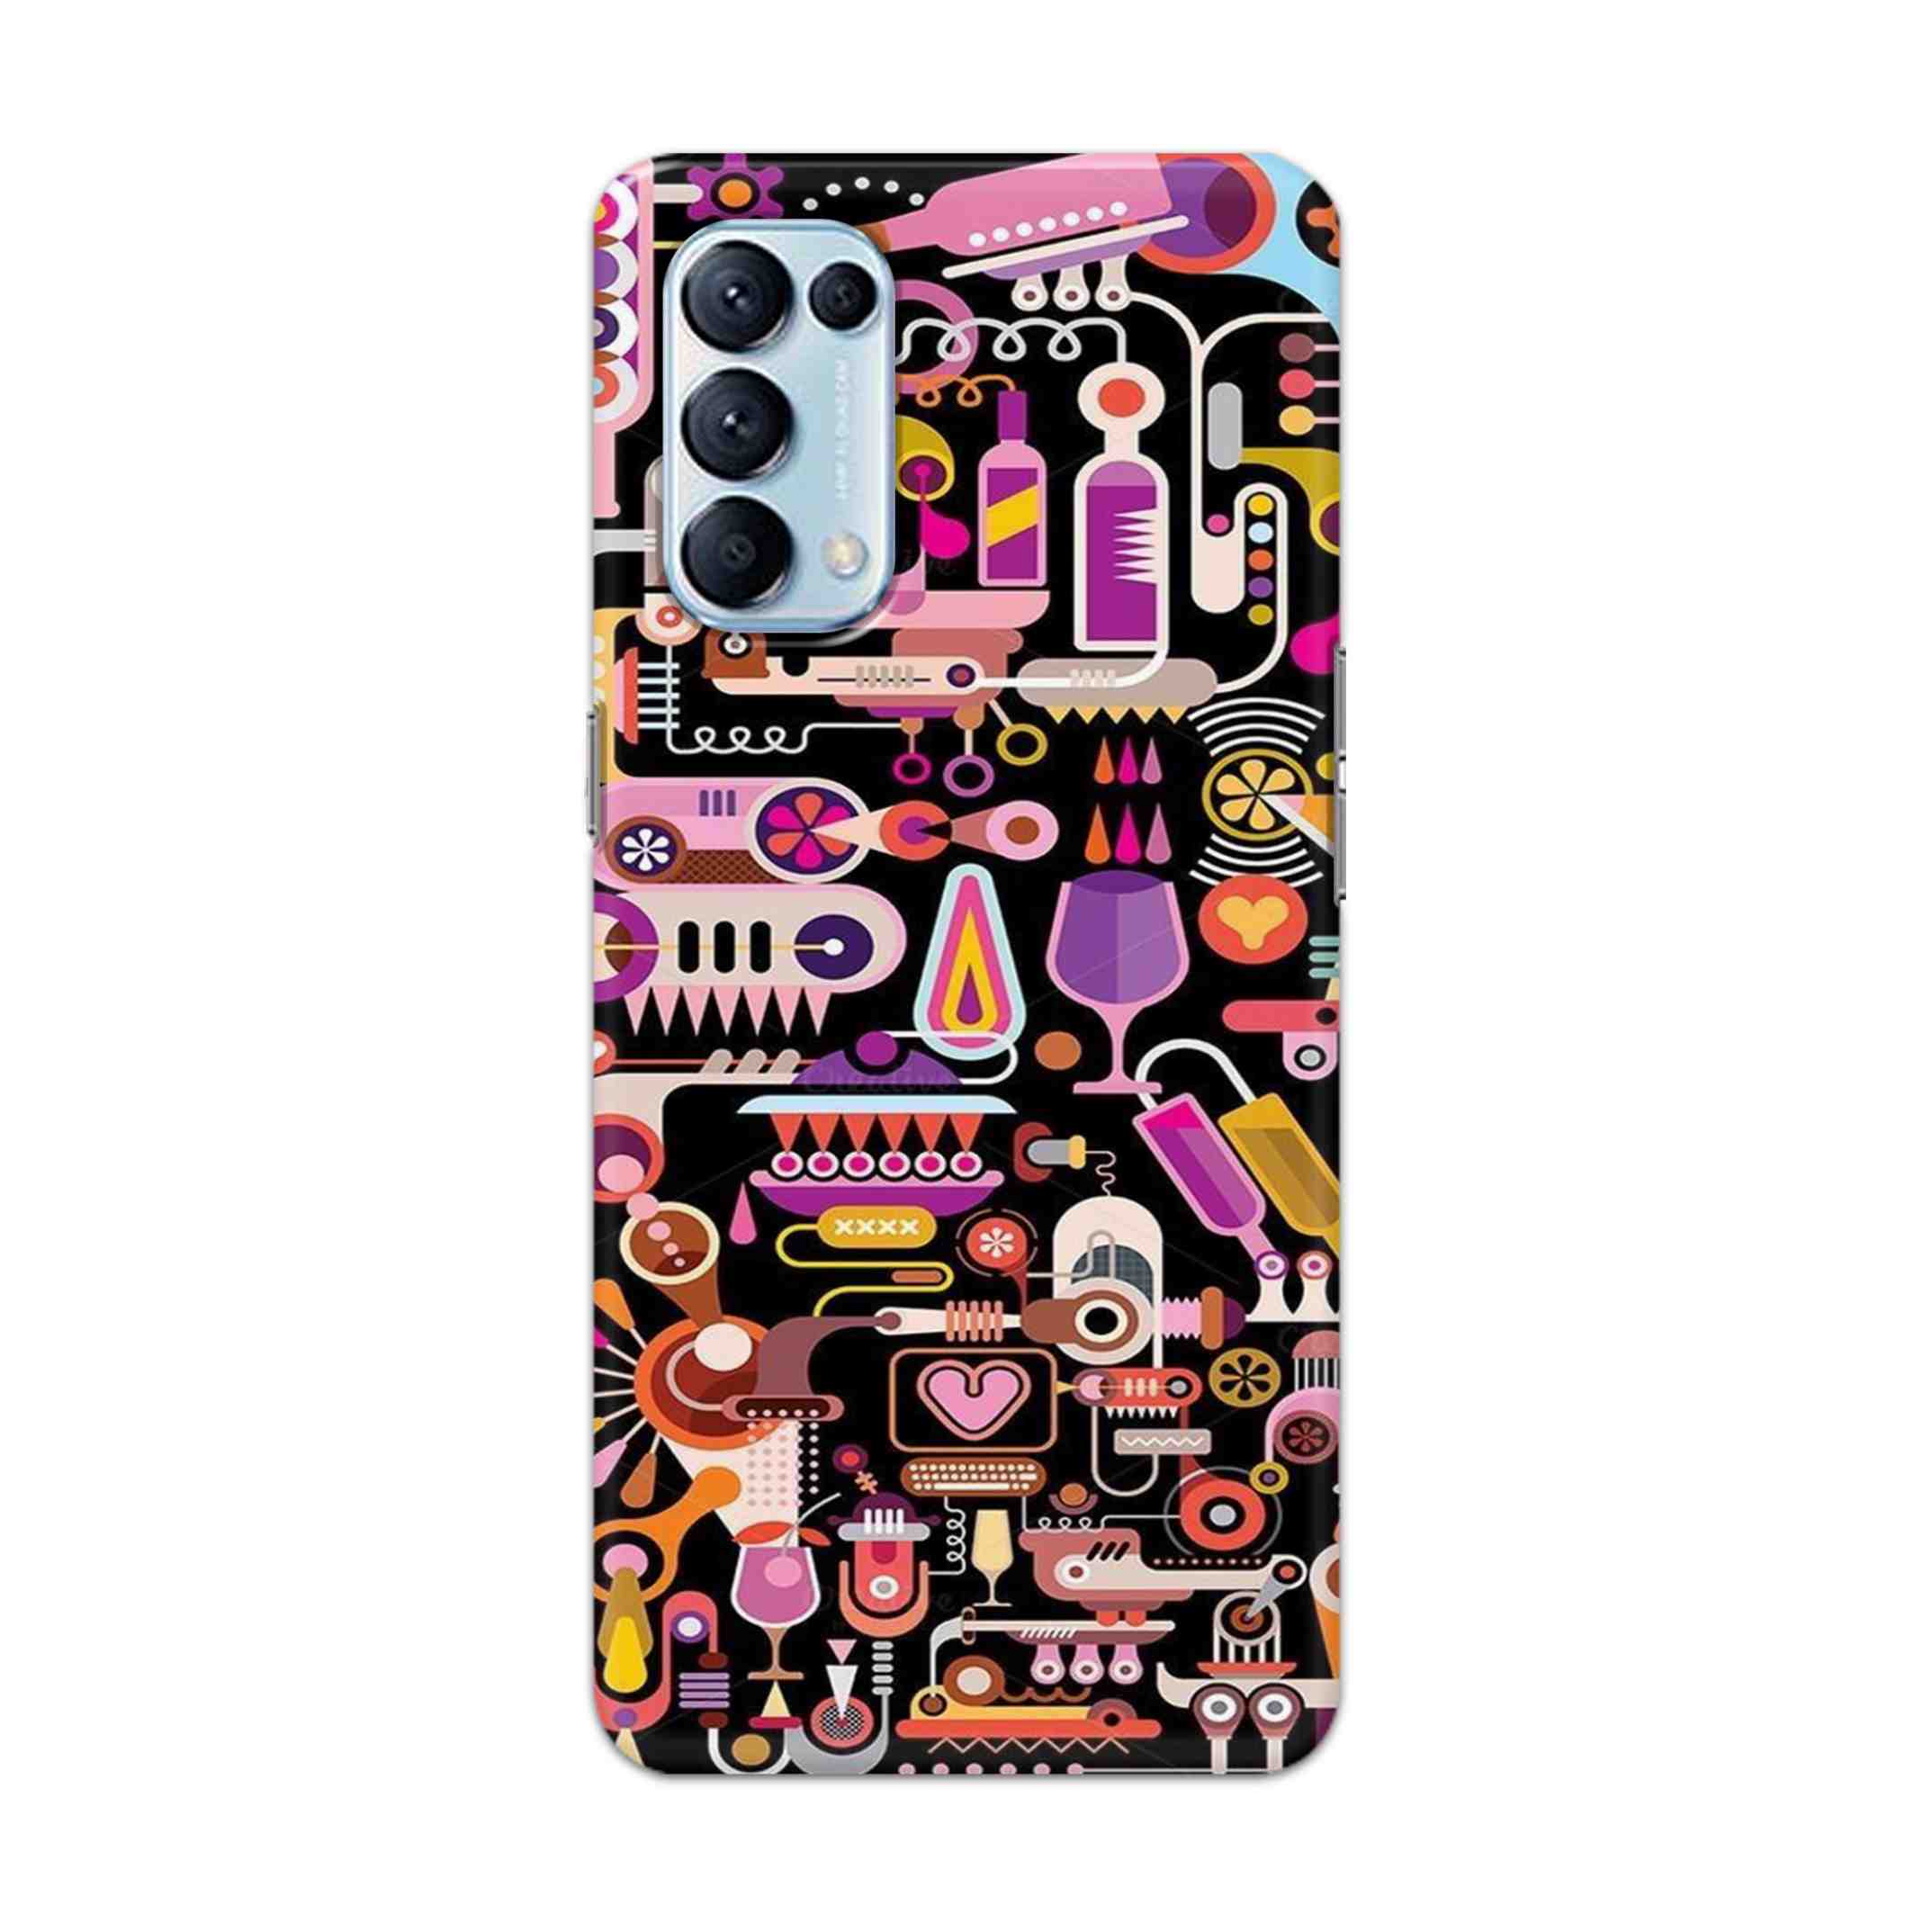 Buy Lab Art Hard Back Mobile Phone Case Cover For Oppo Reno 5 Pro 5G Online